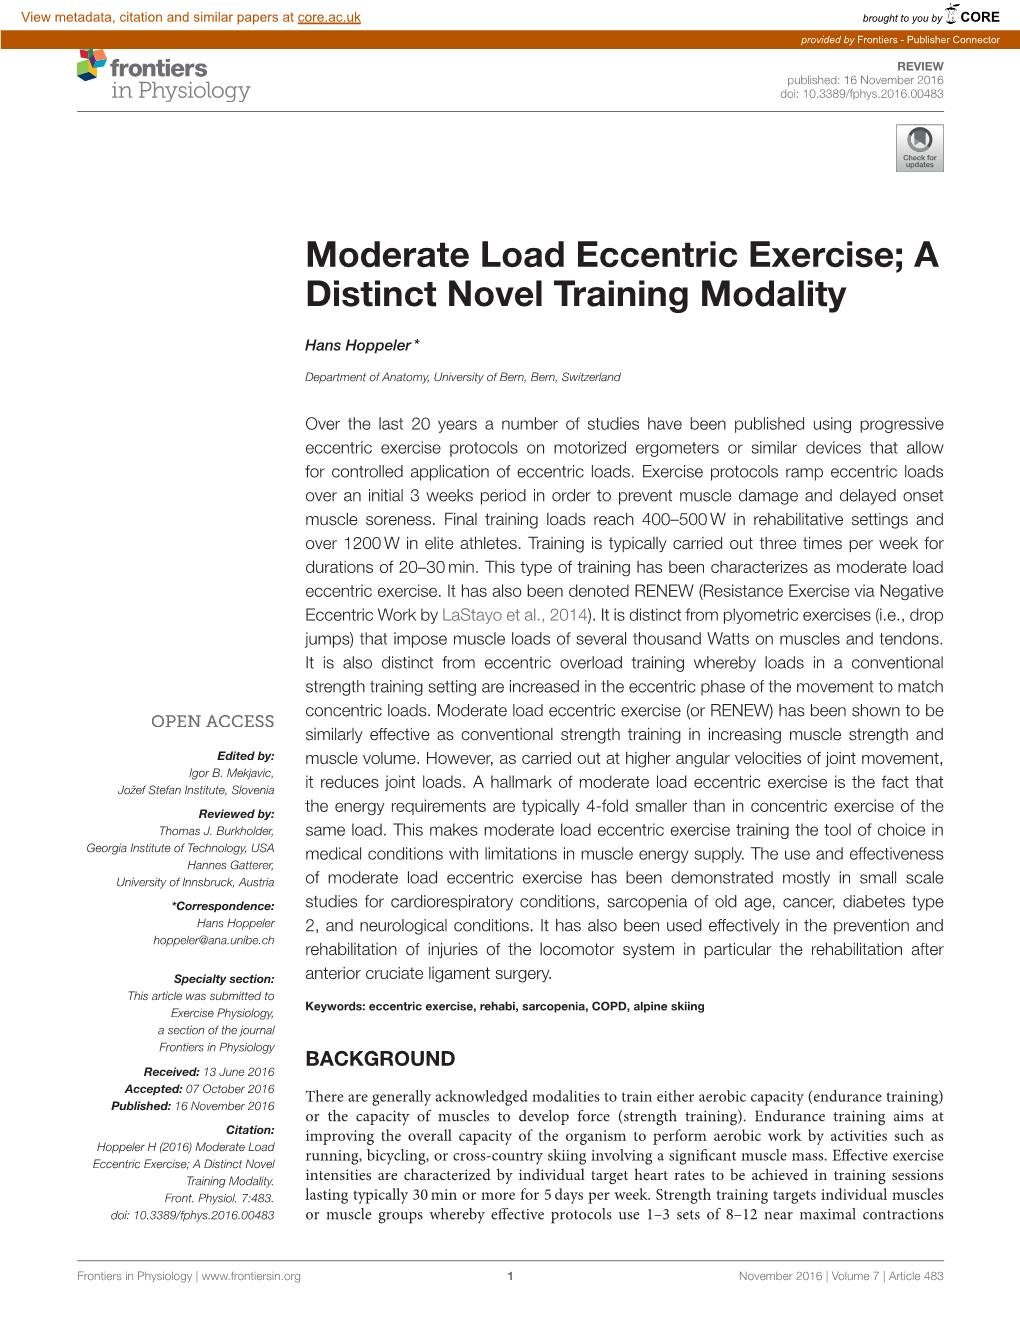 Moderate Load Eccentric Exercise; a Distinct Novel Training Modality